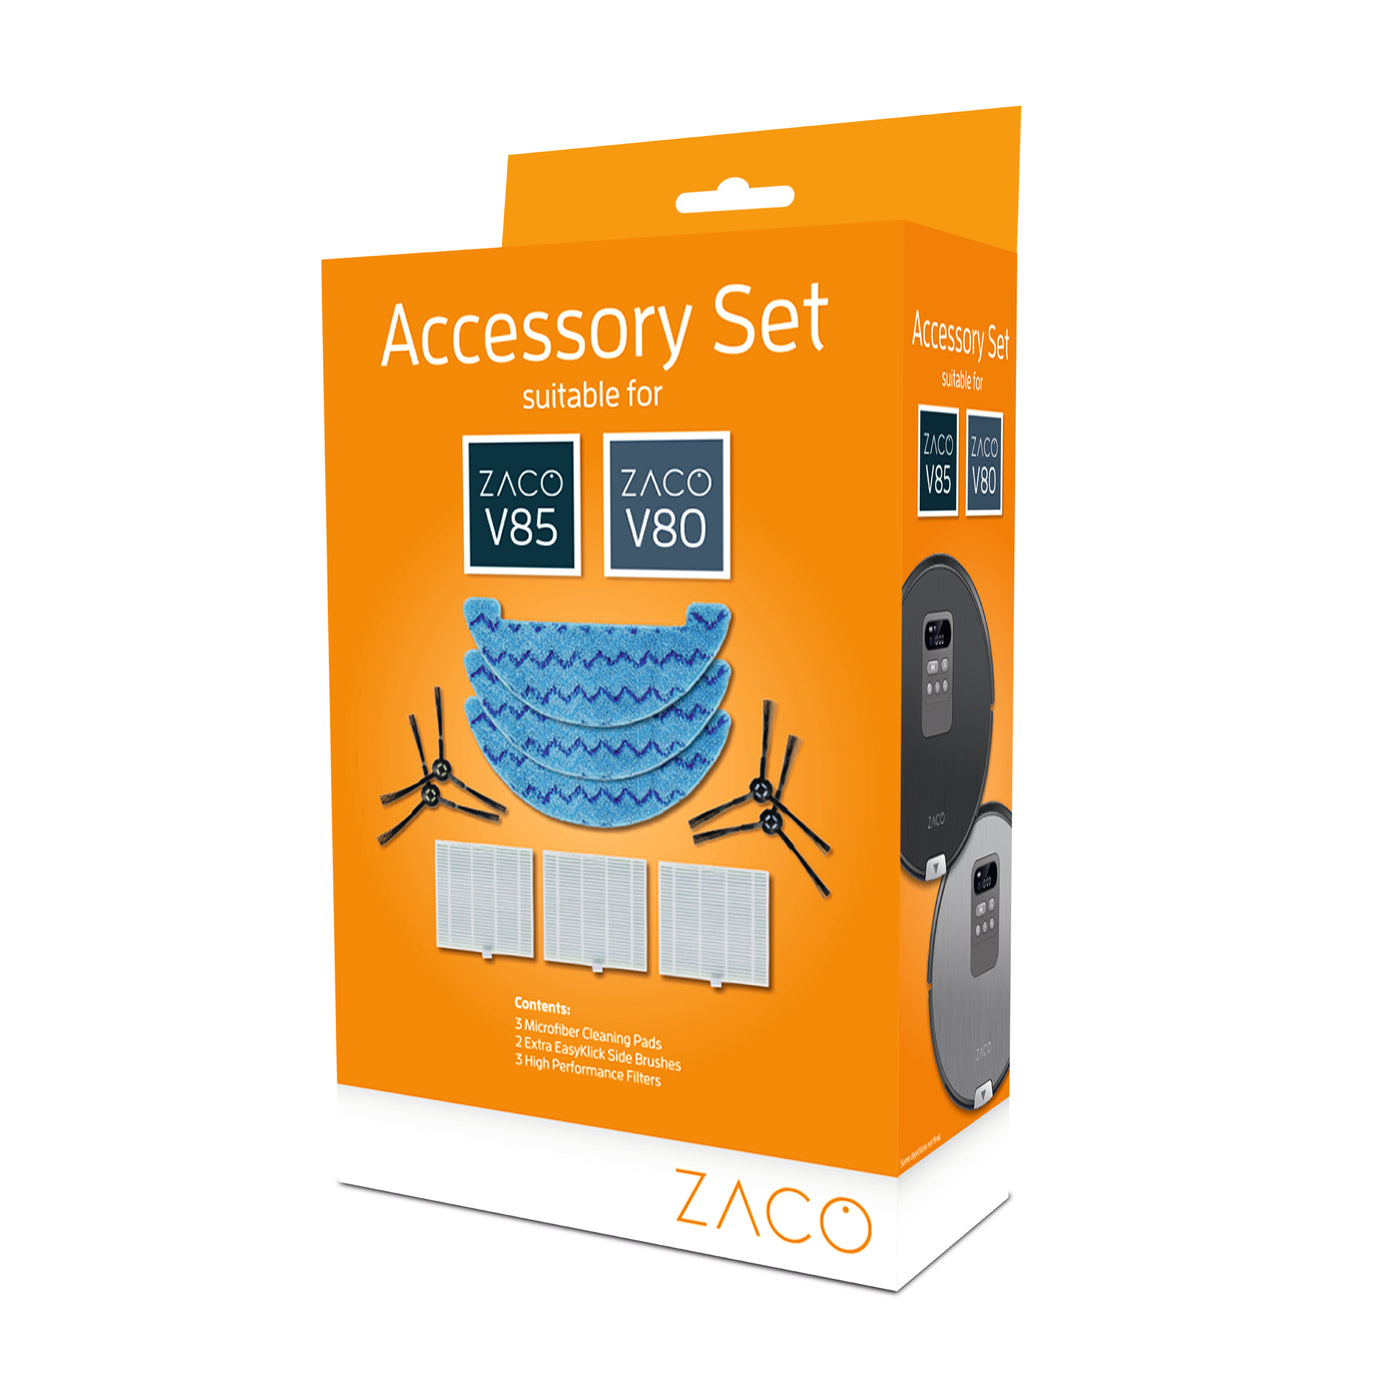 Accessory set for ZACO V80 and V85